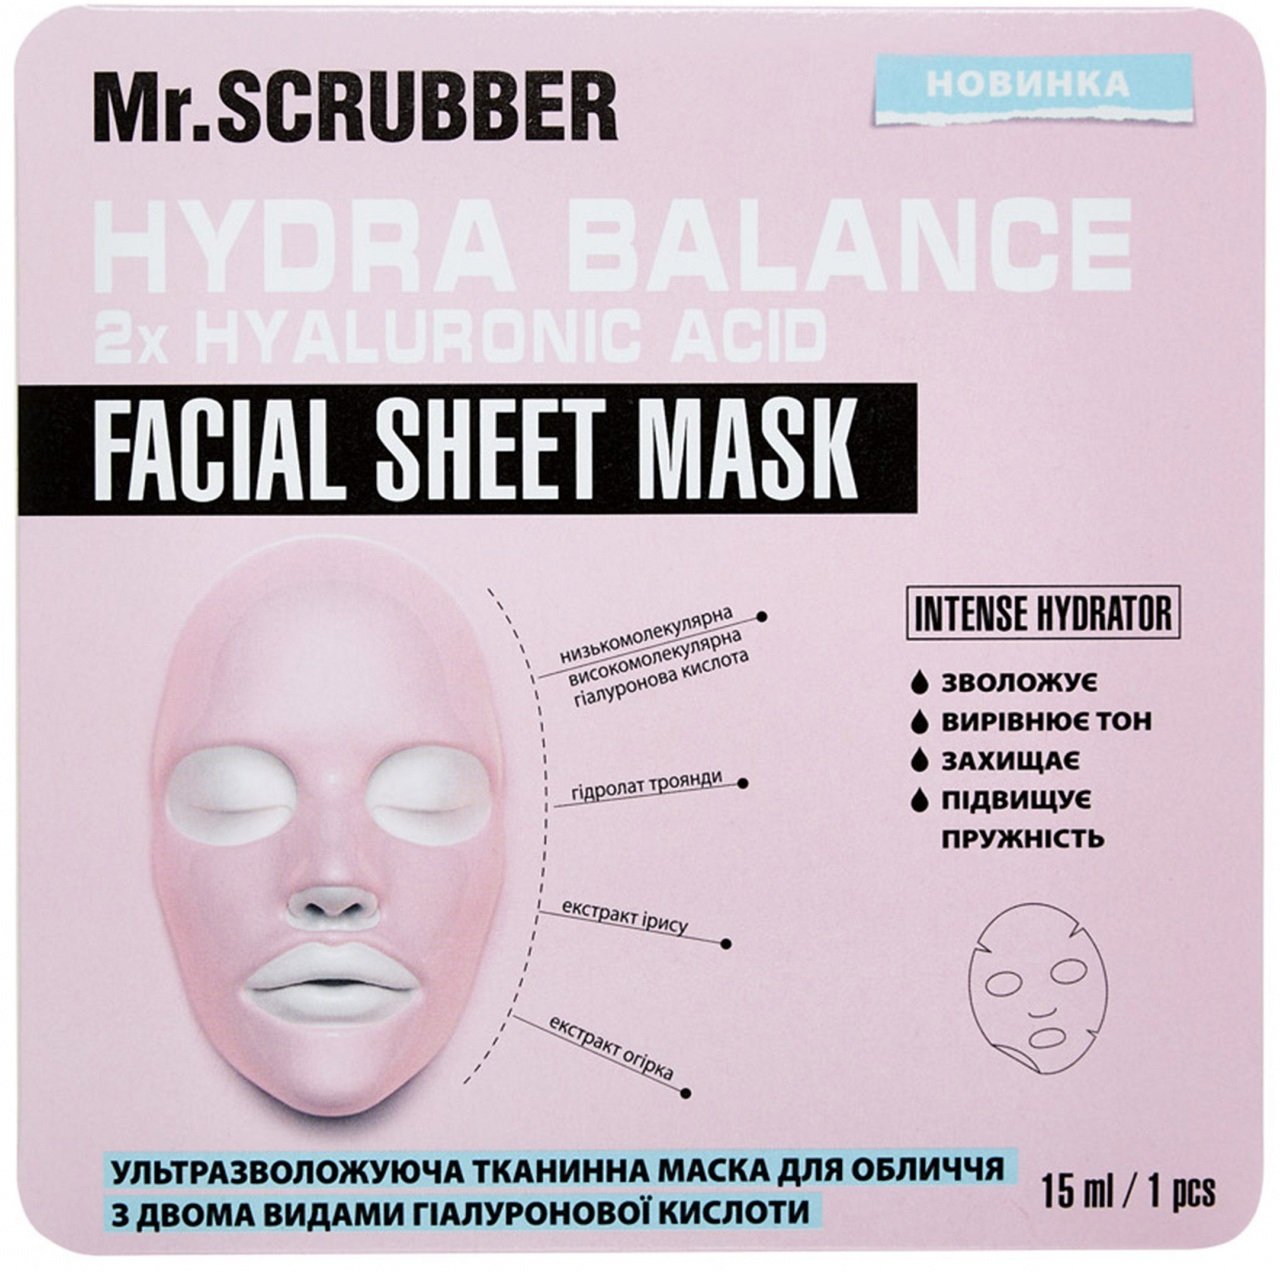 Ультразволожуюча тканинна маска для обличчя Mr.Scrubber Hydra balance Facial Sheet Mask, 15 мл - фото 1